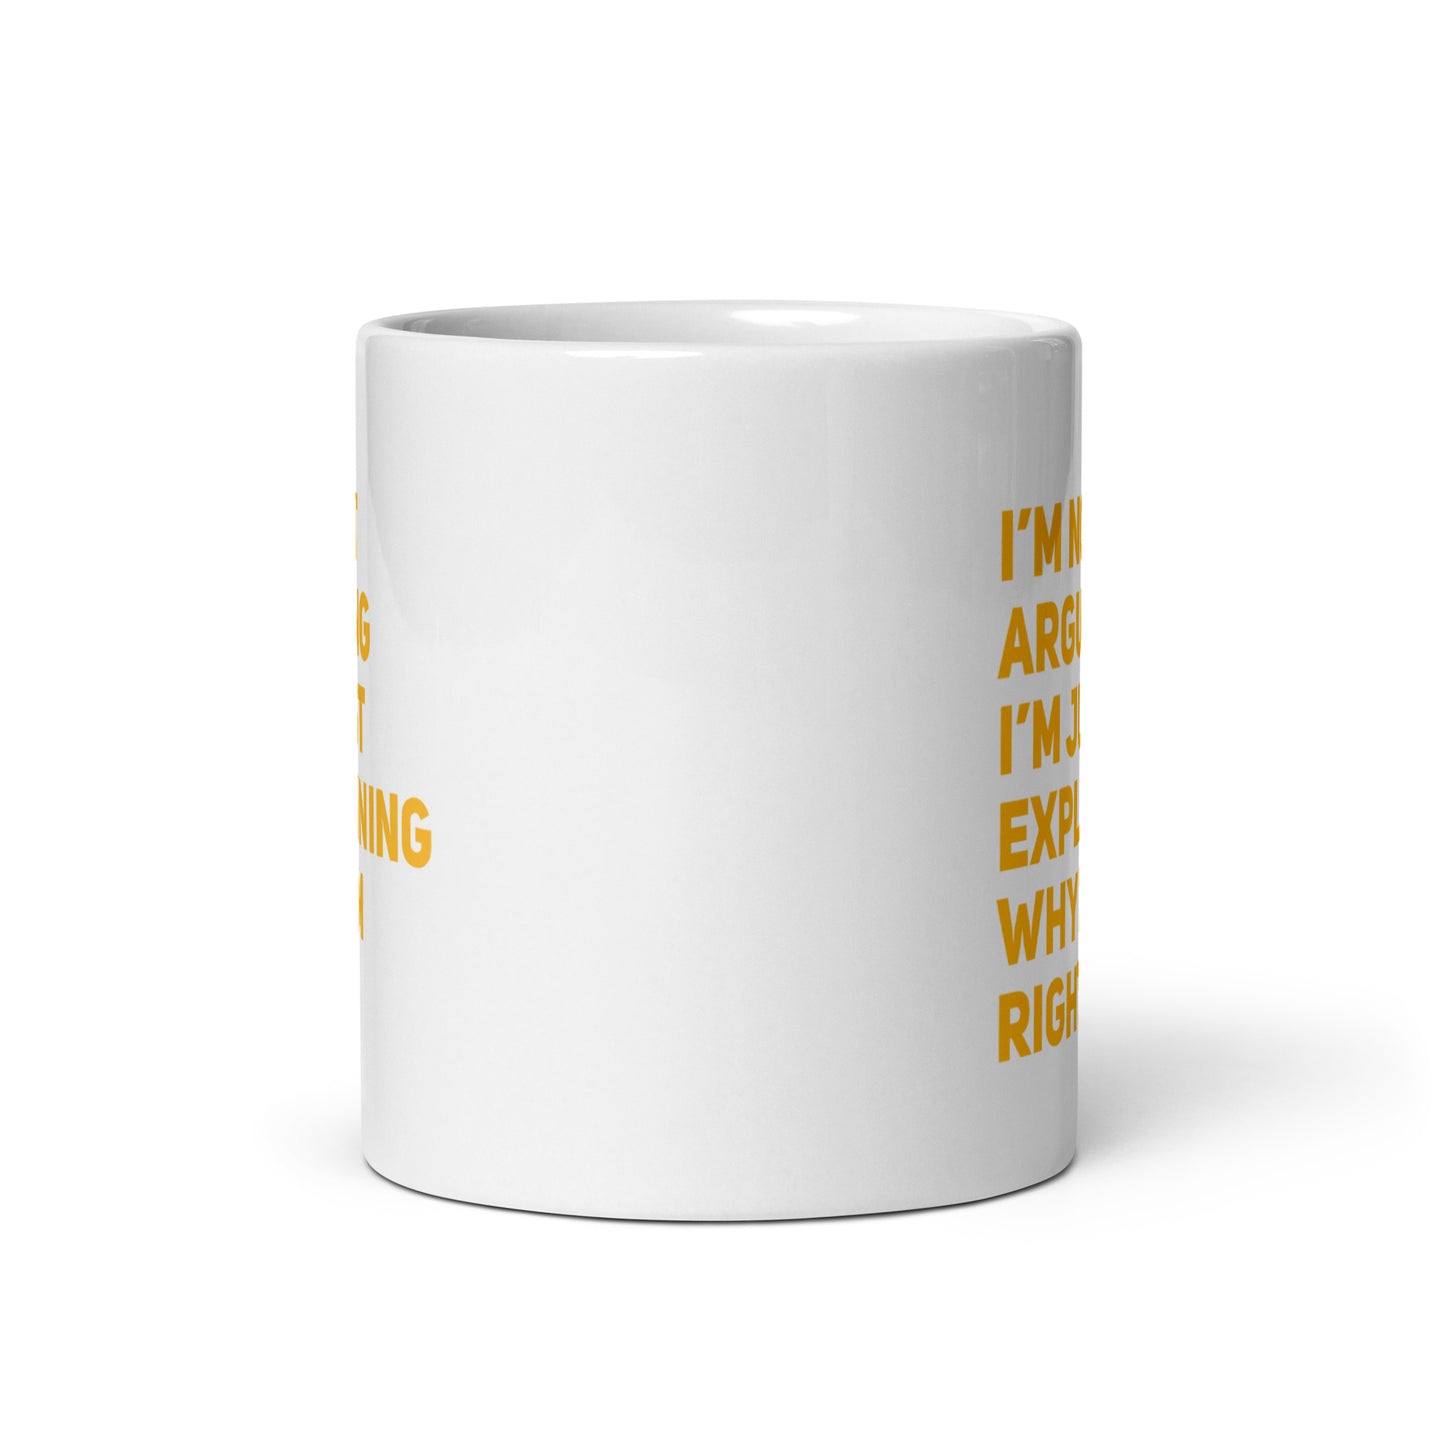 I'm Not Arguing, I'm Explaining Why I'm Right White Ceramic Coffee Mug